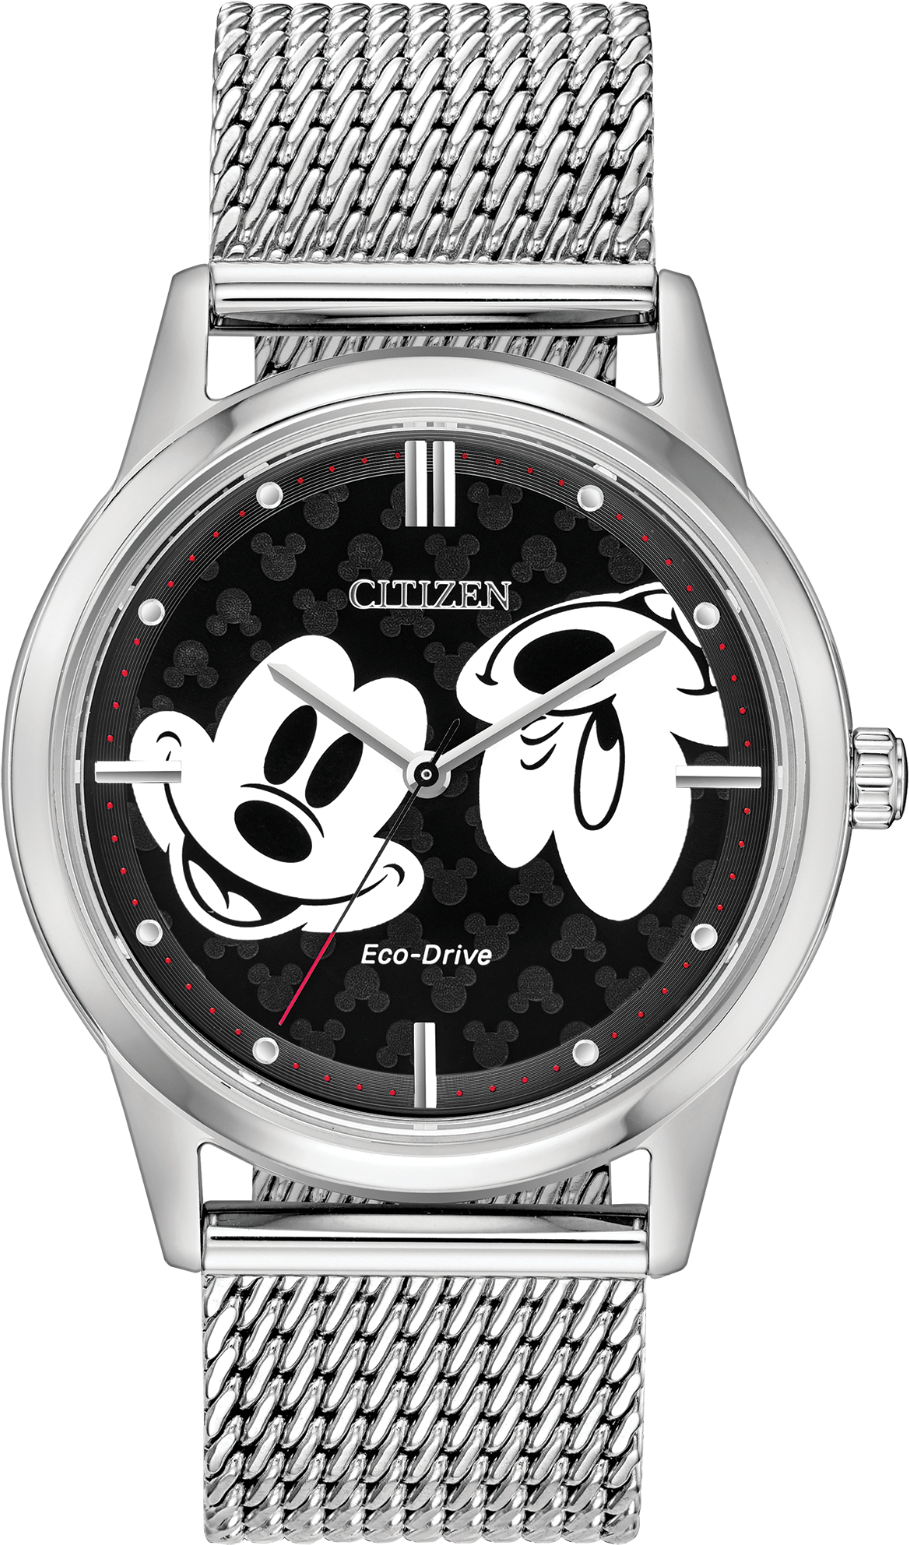 Arriba 41+ imagen citizen mickey mouse watch